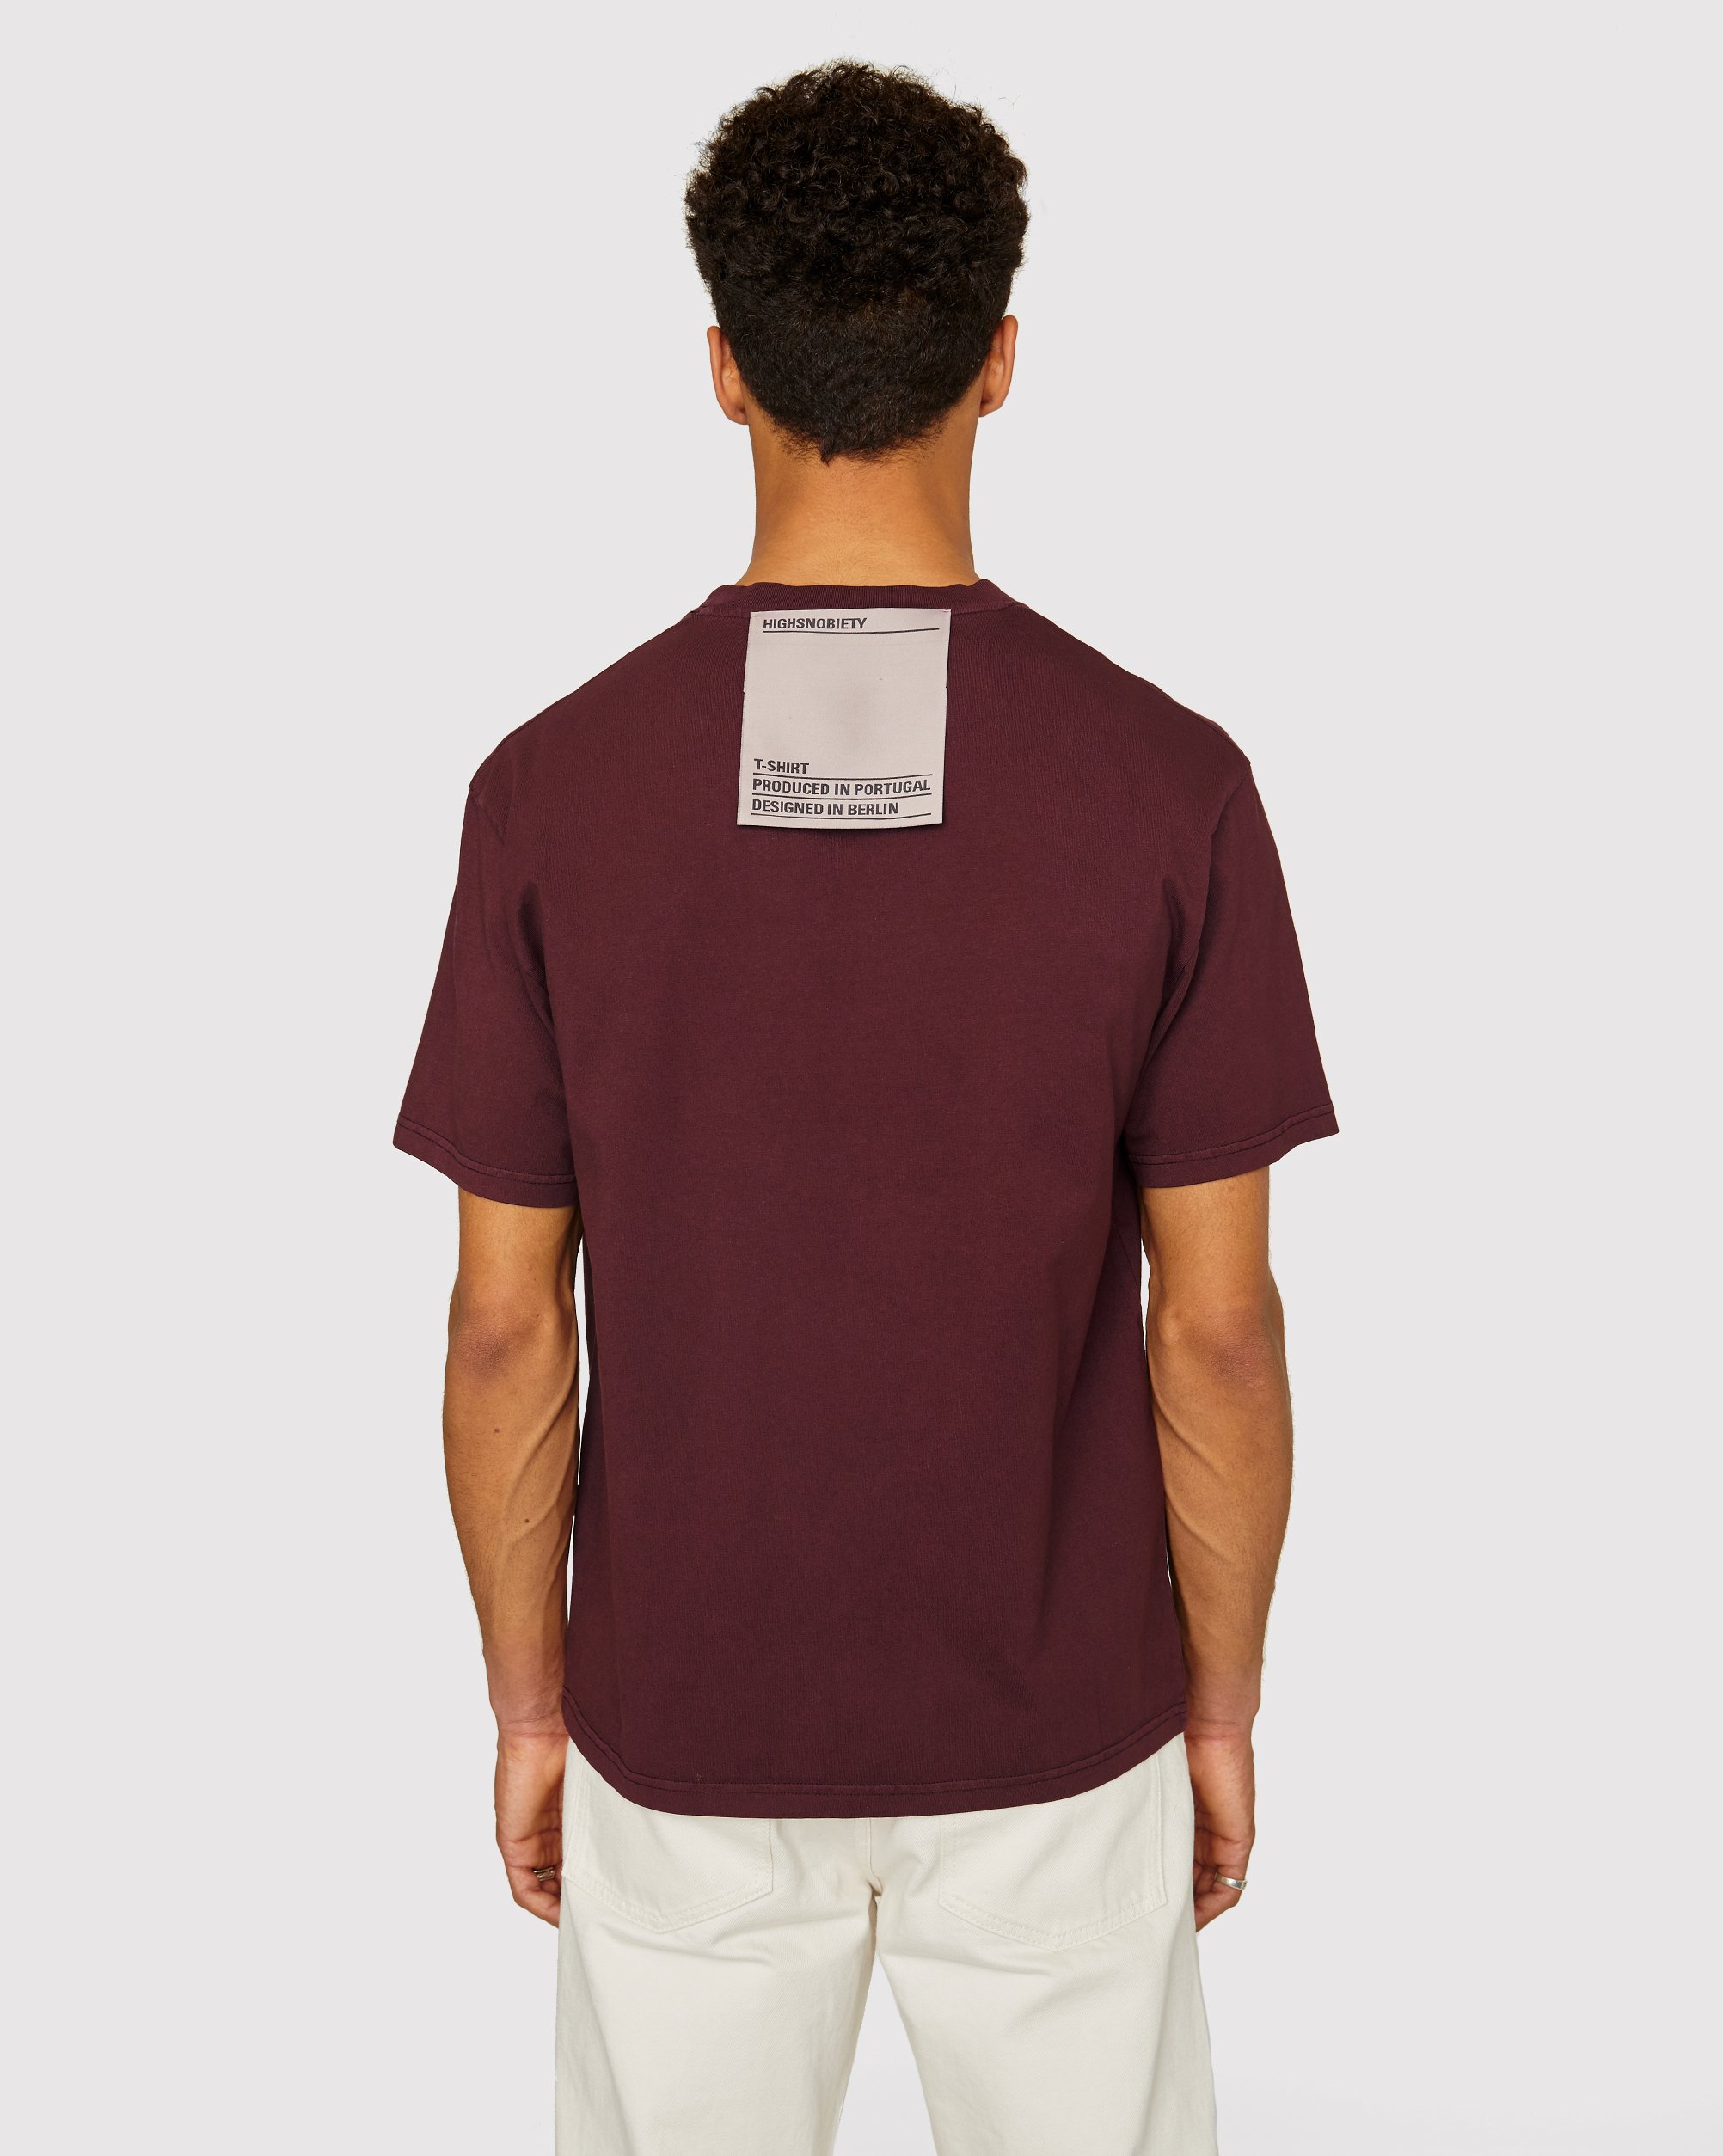 Highsnobiety - Staples T-Shirt Burgundy - Clothing - Red - Image 3